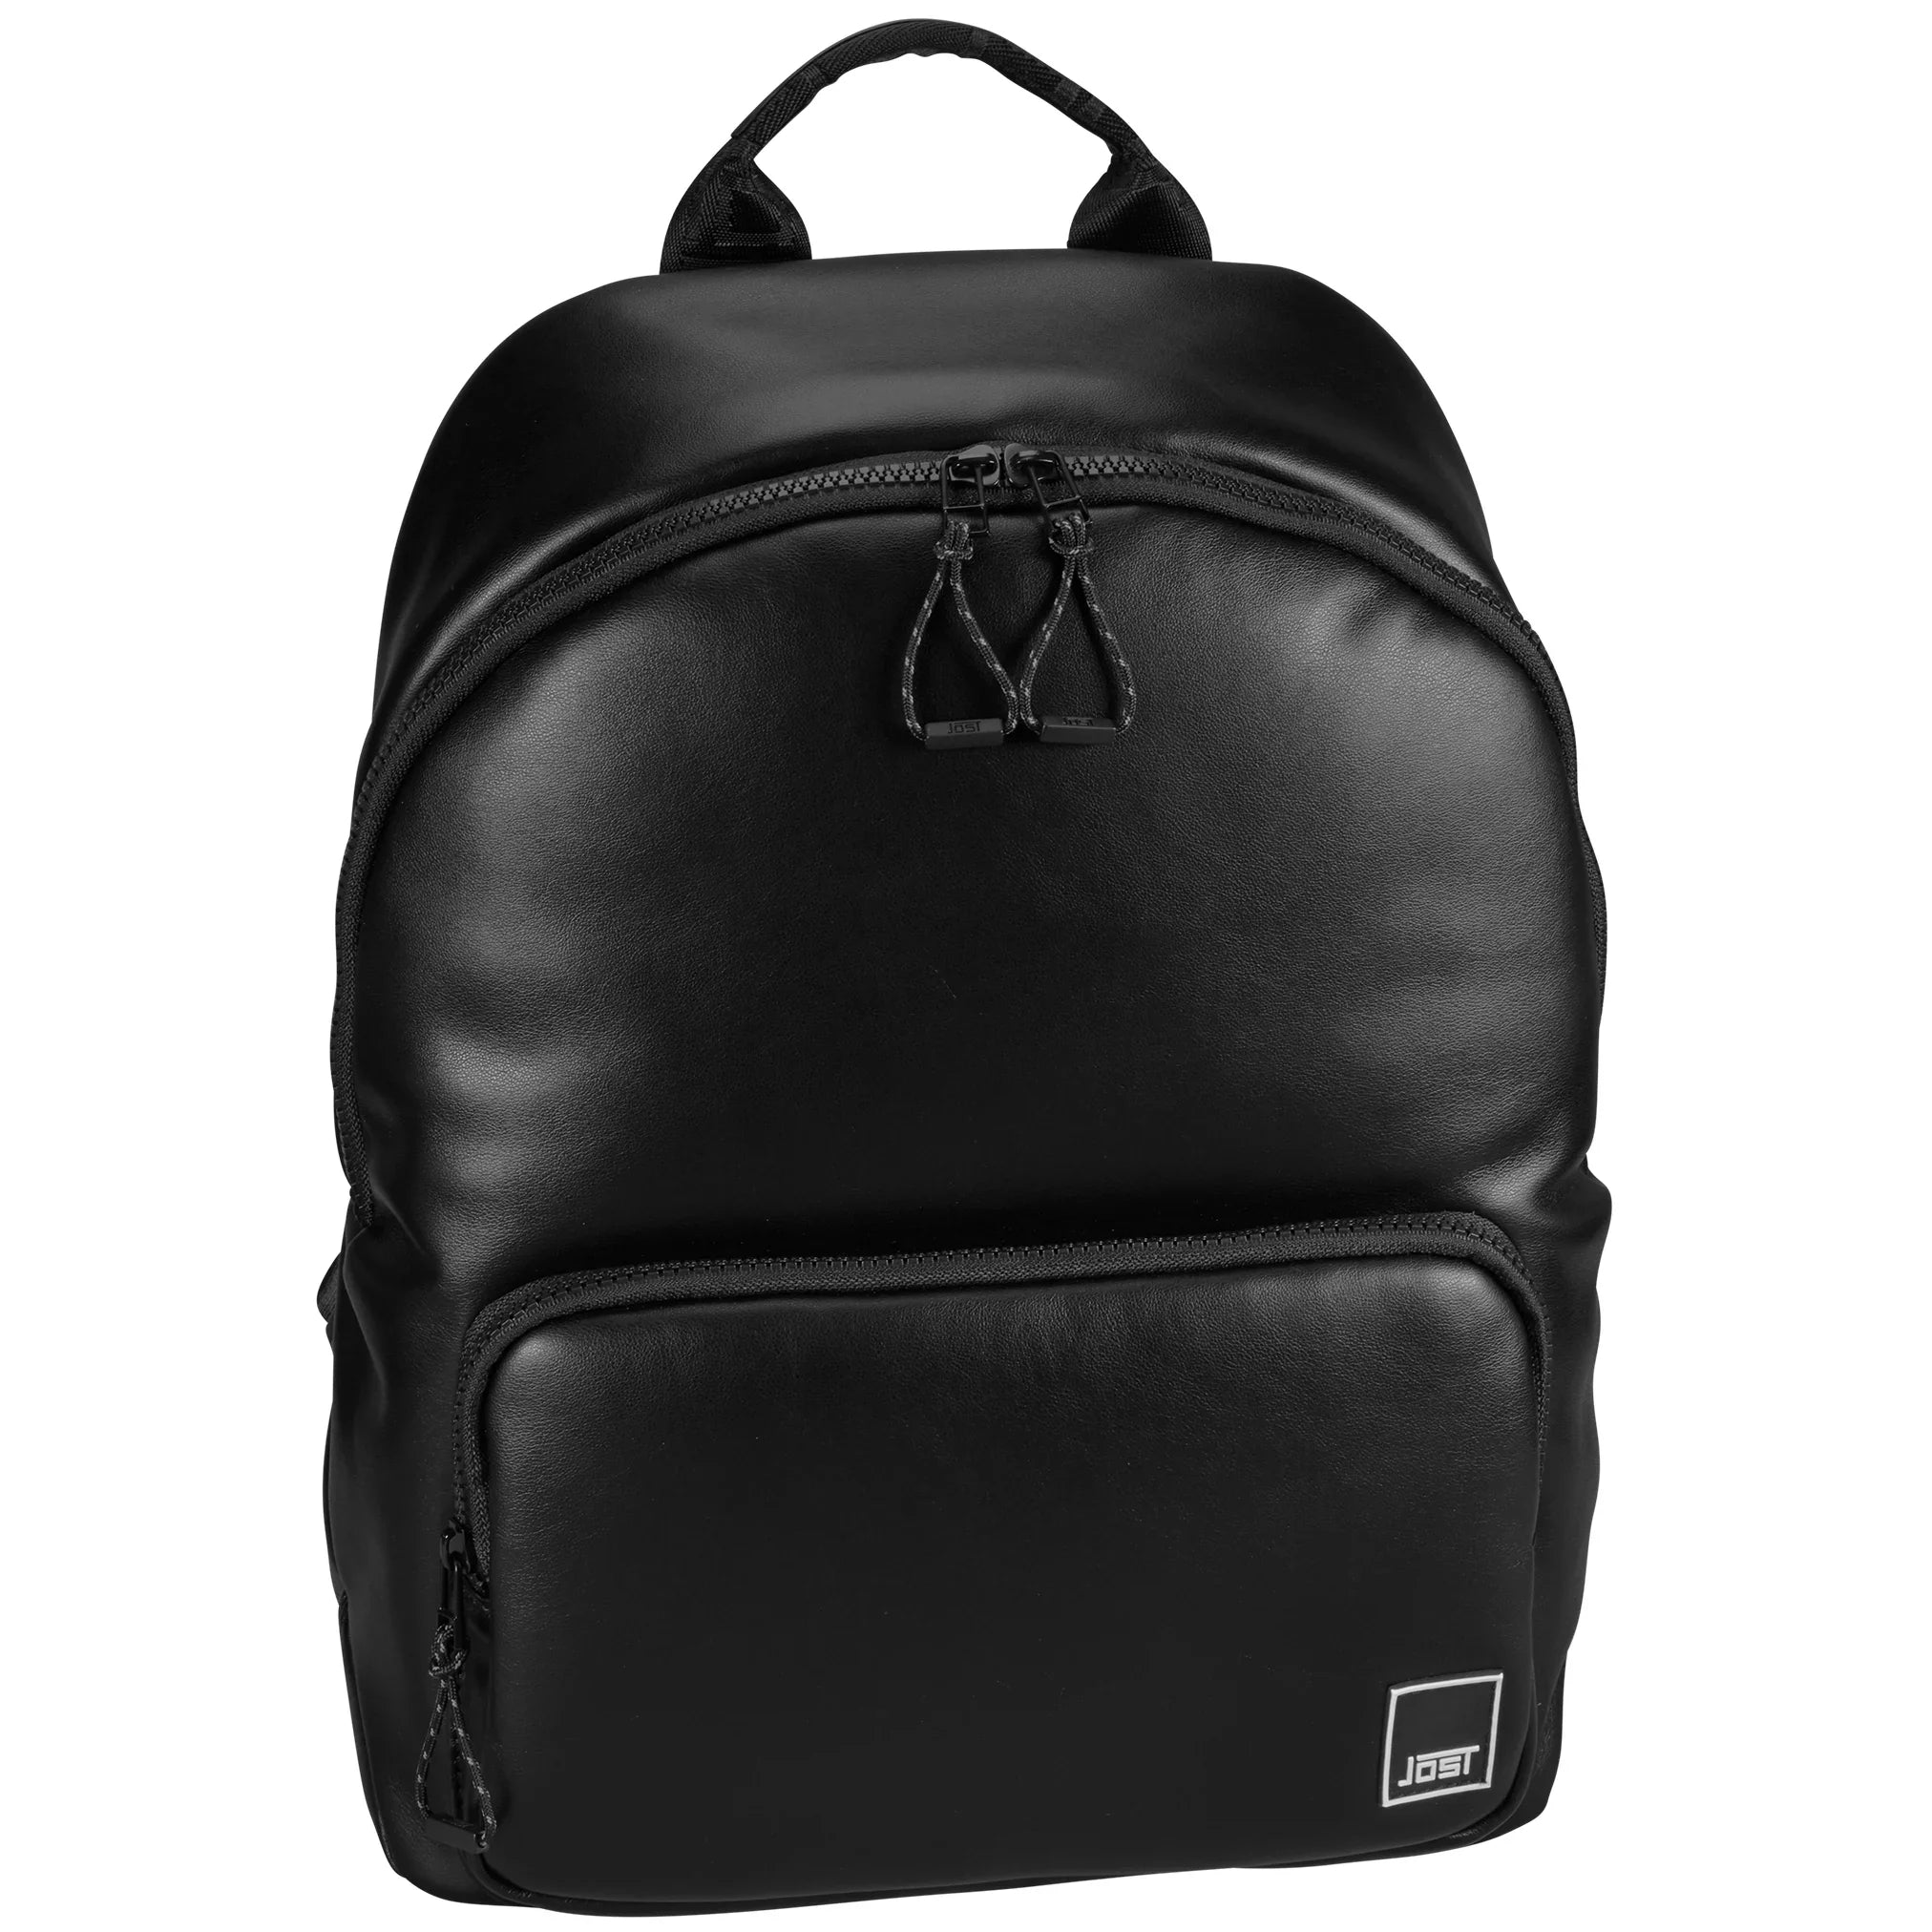 Jost Arvika daypack backpack 38 cm - Black